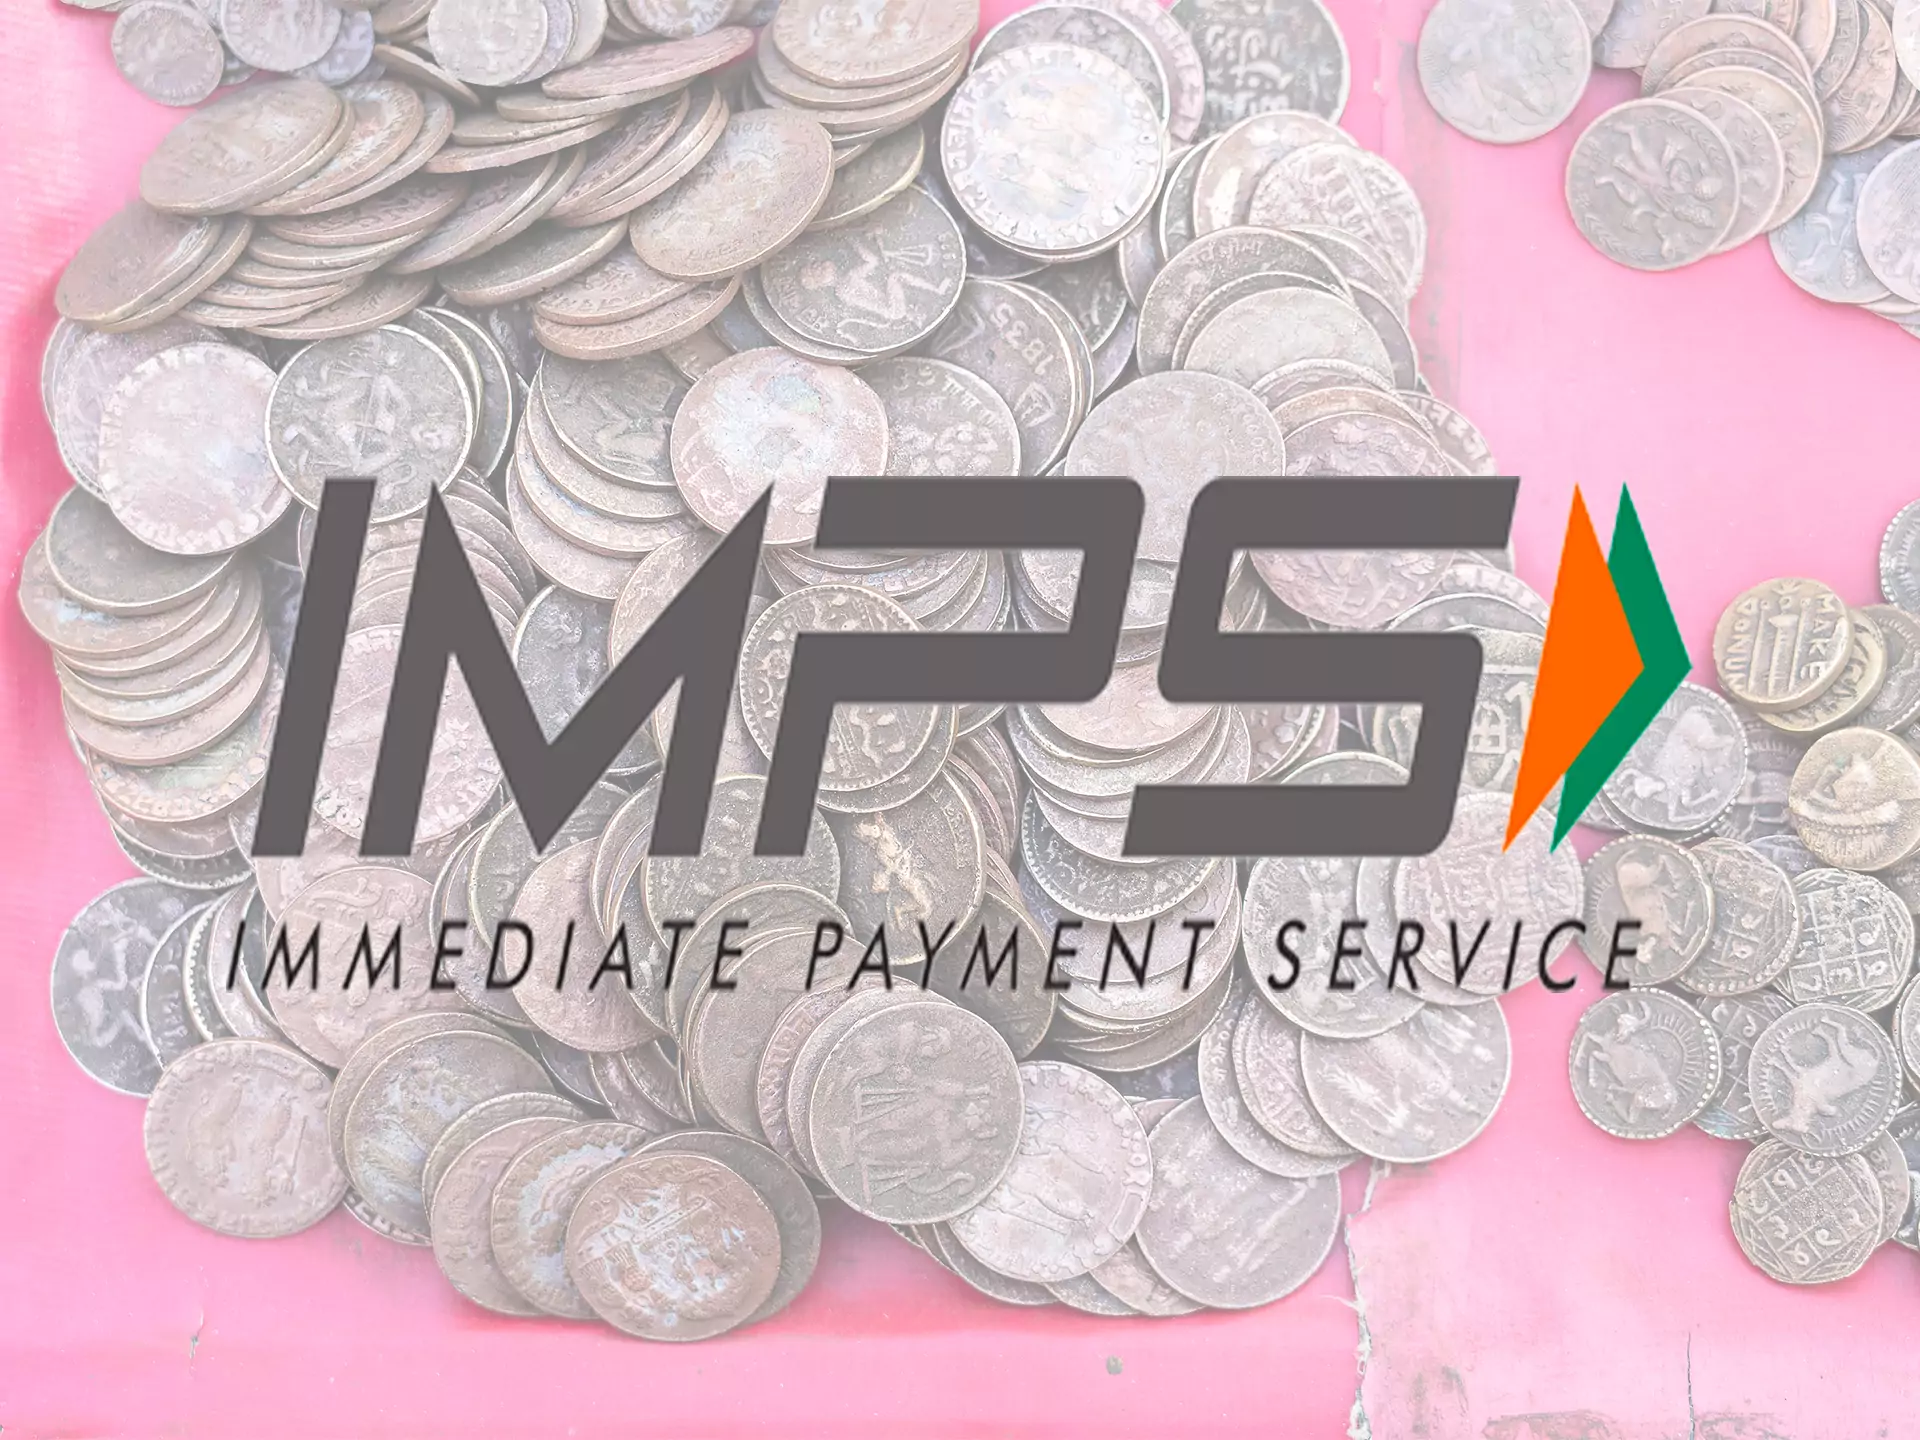 IMPS allows to make transaction between popular Indian banks.